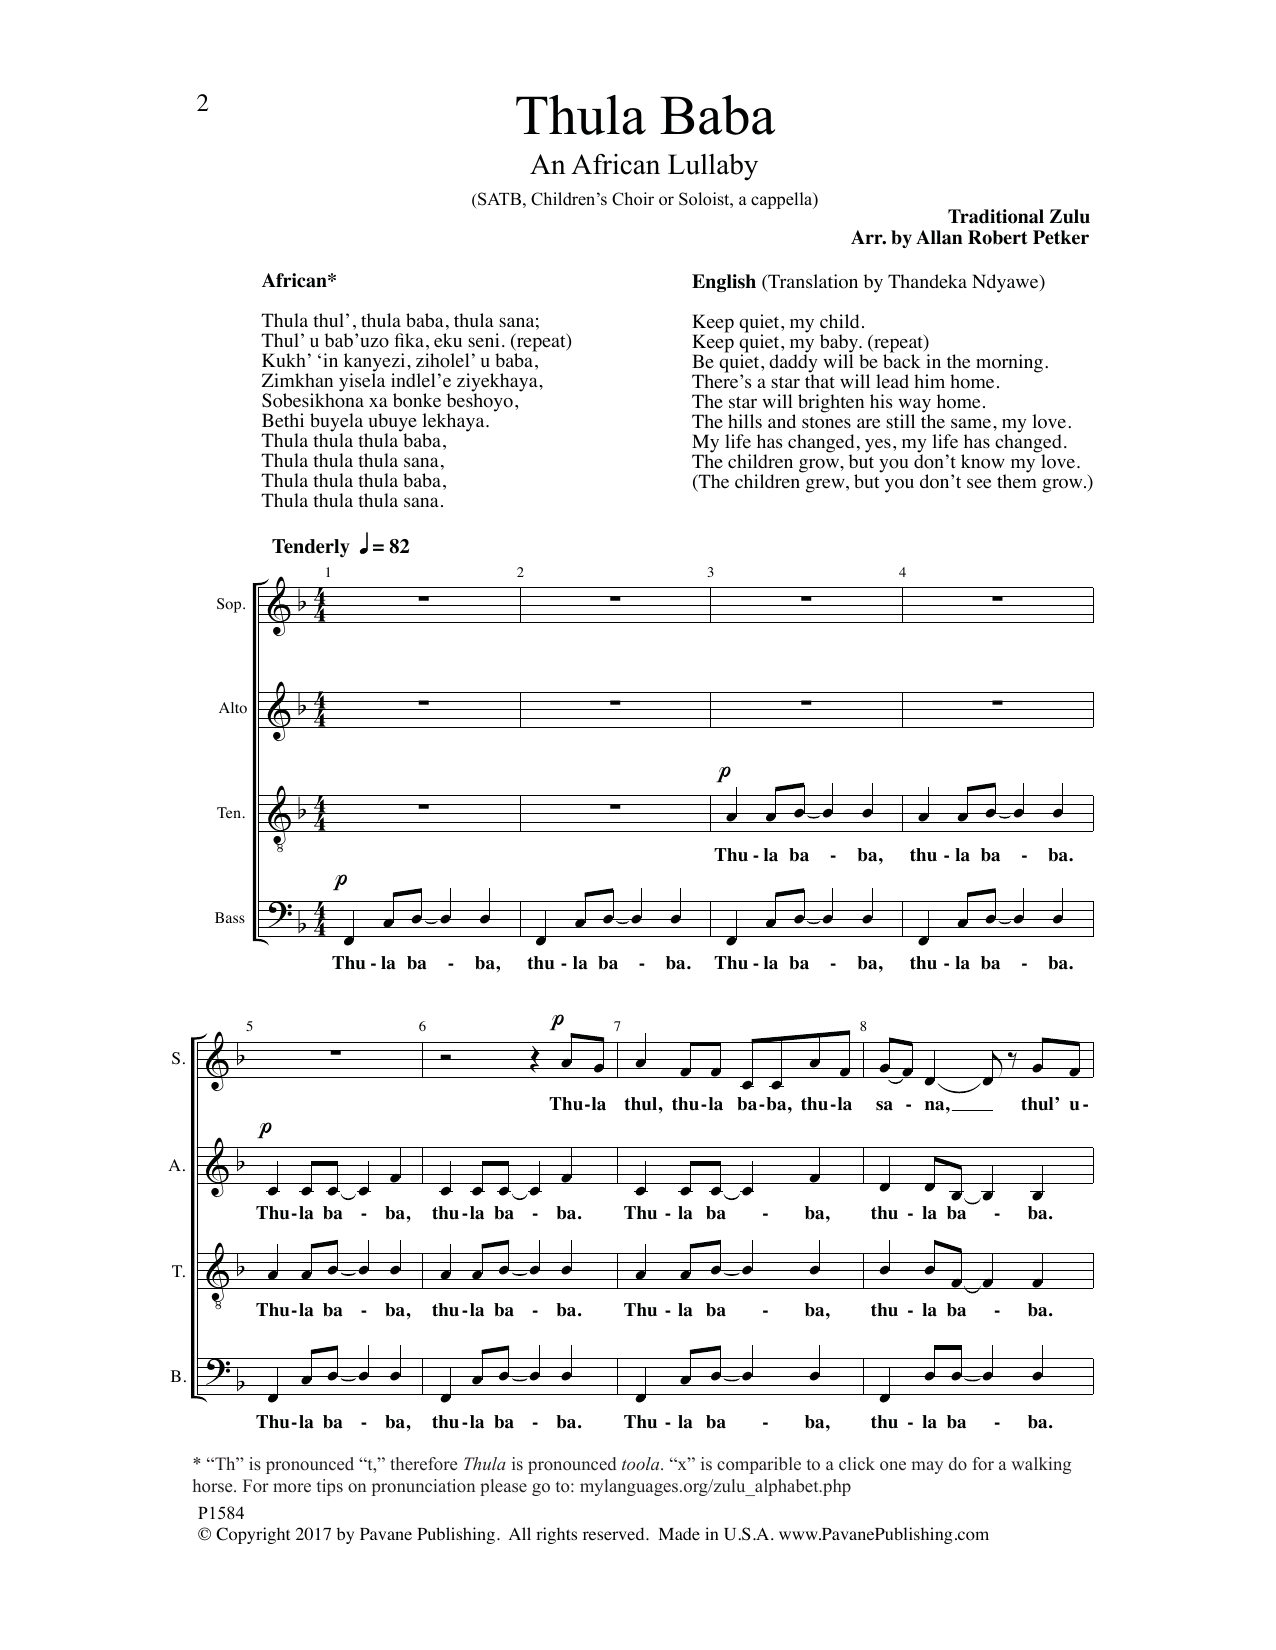 Allan Robert Petker Thula Baba Sheet Music Notes & Chords for Choral - Download or Print PDF